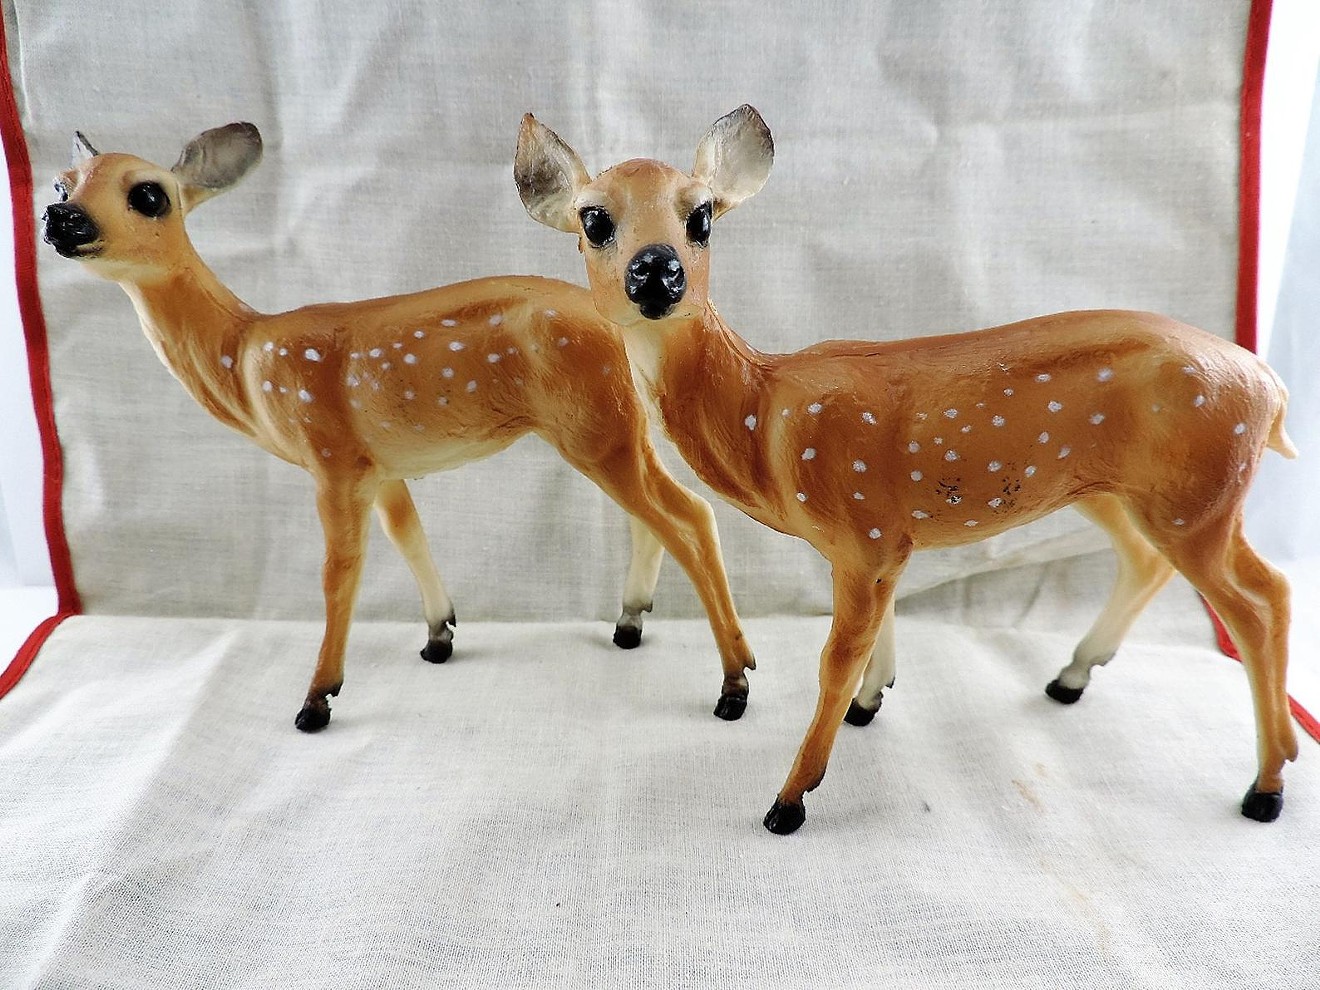 See ShopLocalColorado.co vendor VogelHaus Vintage for Breyer deer figurines and more.